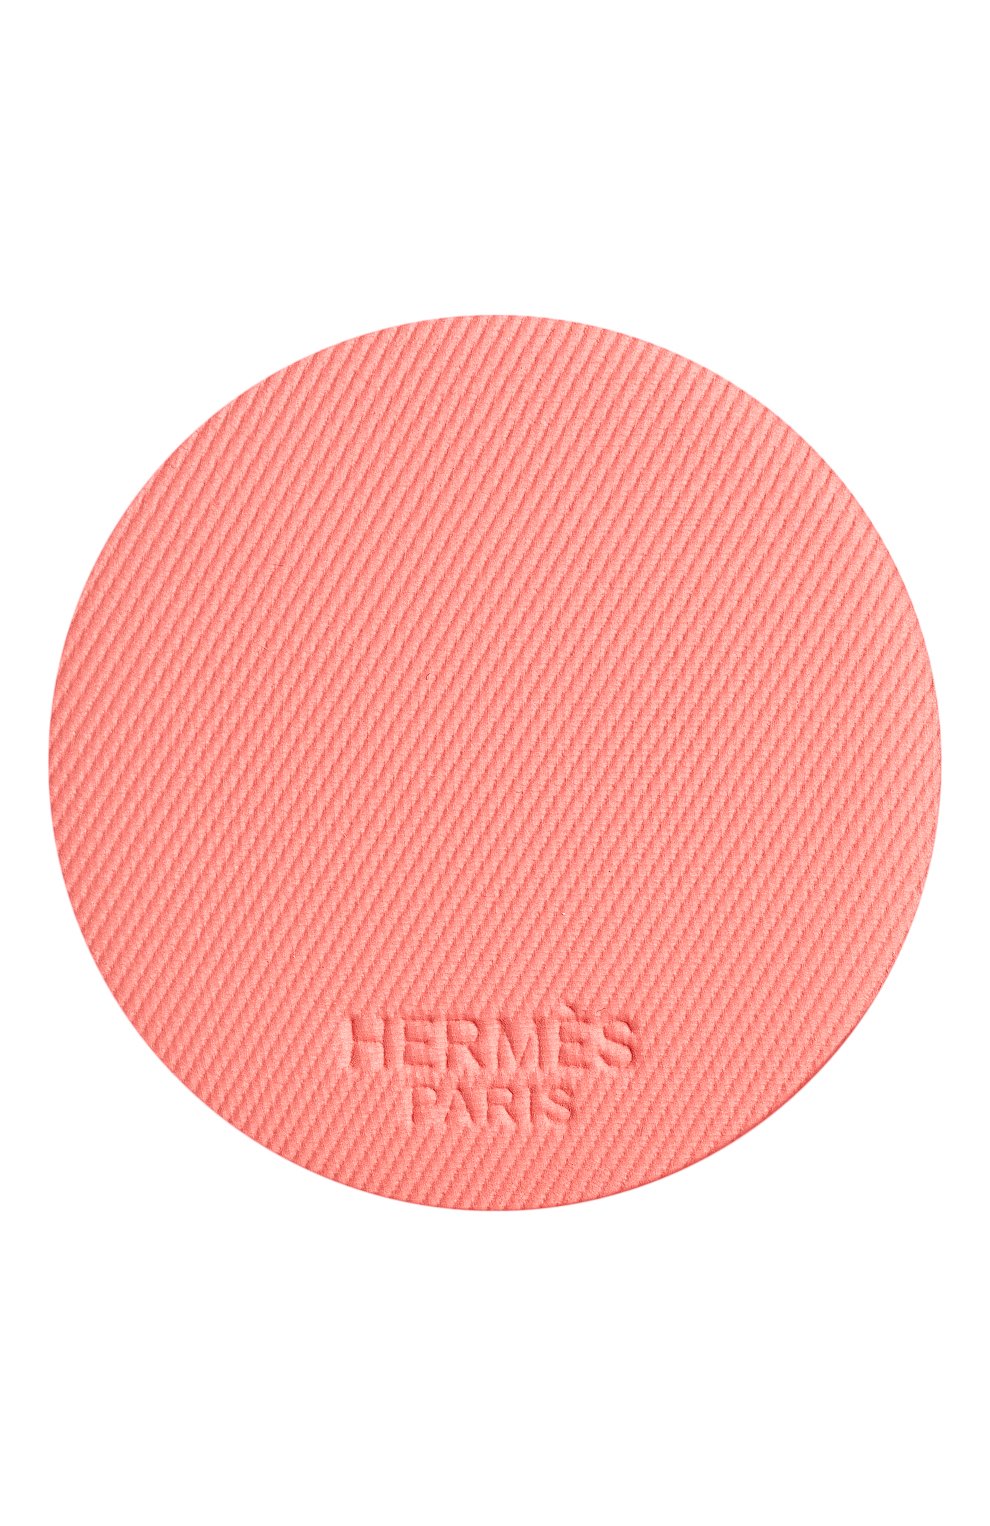 Румяна rose hermès silky blush, rose blush (6g) HERMÈS  цвета, арт. 60165PV023H | Фото 10